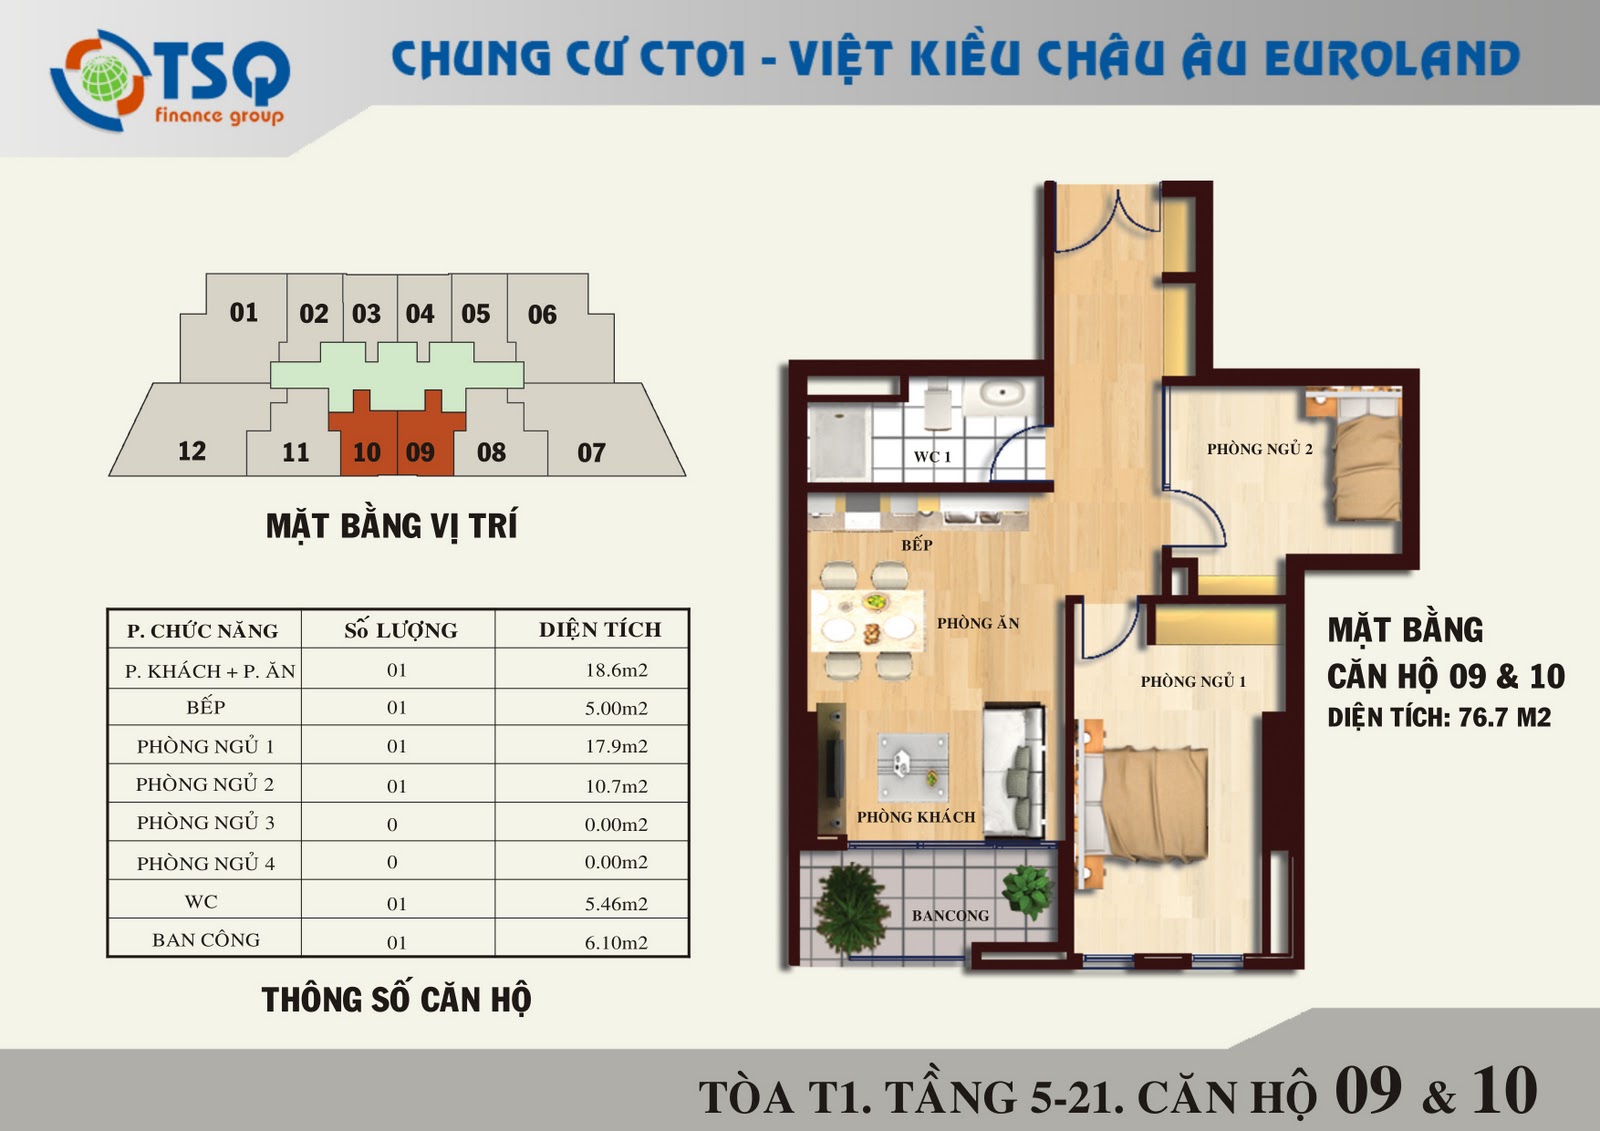 nhung-cau-hoi-thuong-gap-ve-chung-cu-euroland-cho-nguoi-mua-lan-dau-tham-khao-n17t-onehousing-1